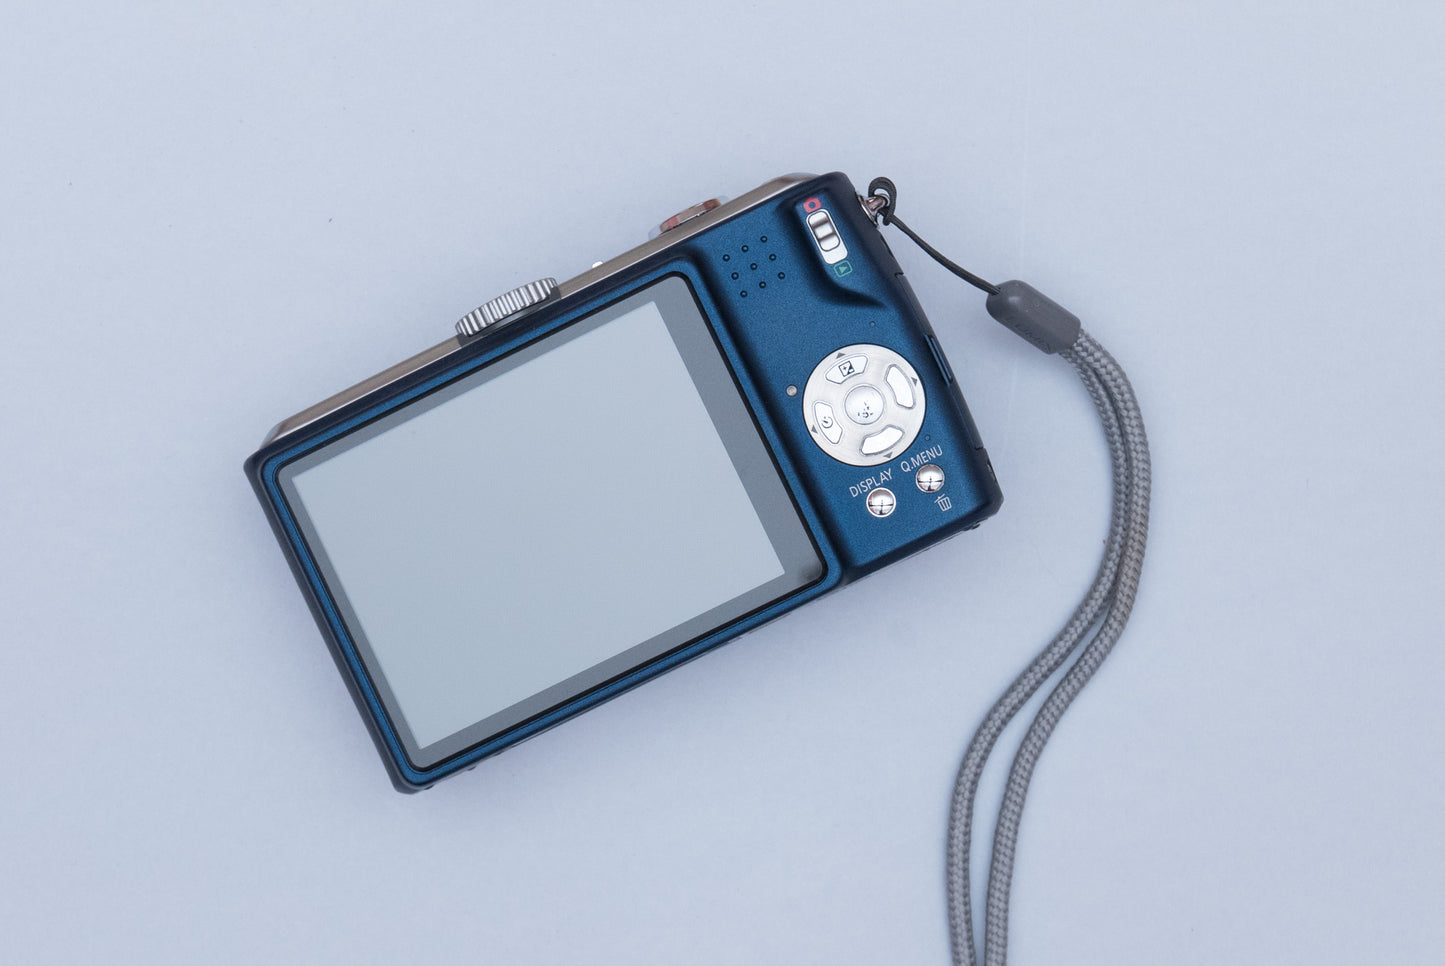 Panasonic Lumix DMC-TZ5 Compact Y2K Digital Camera